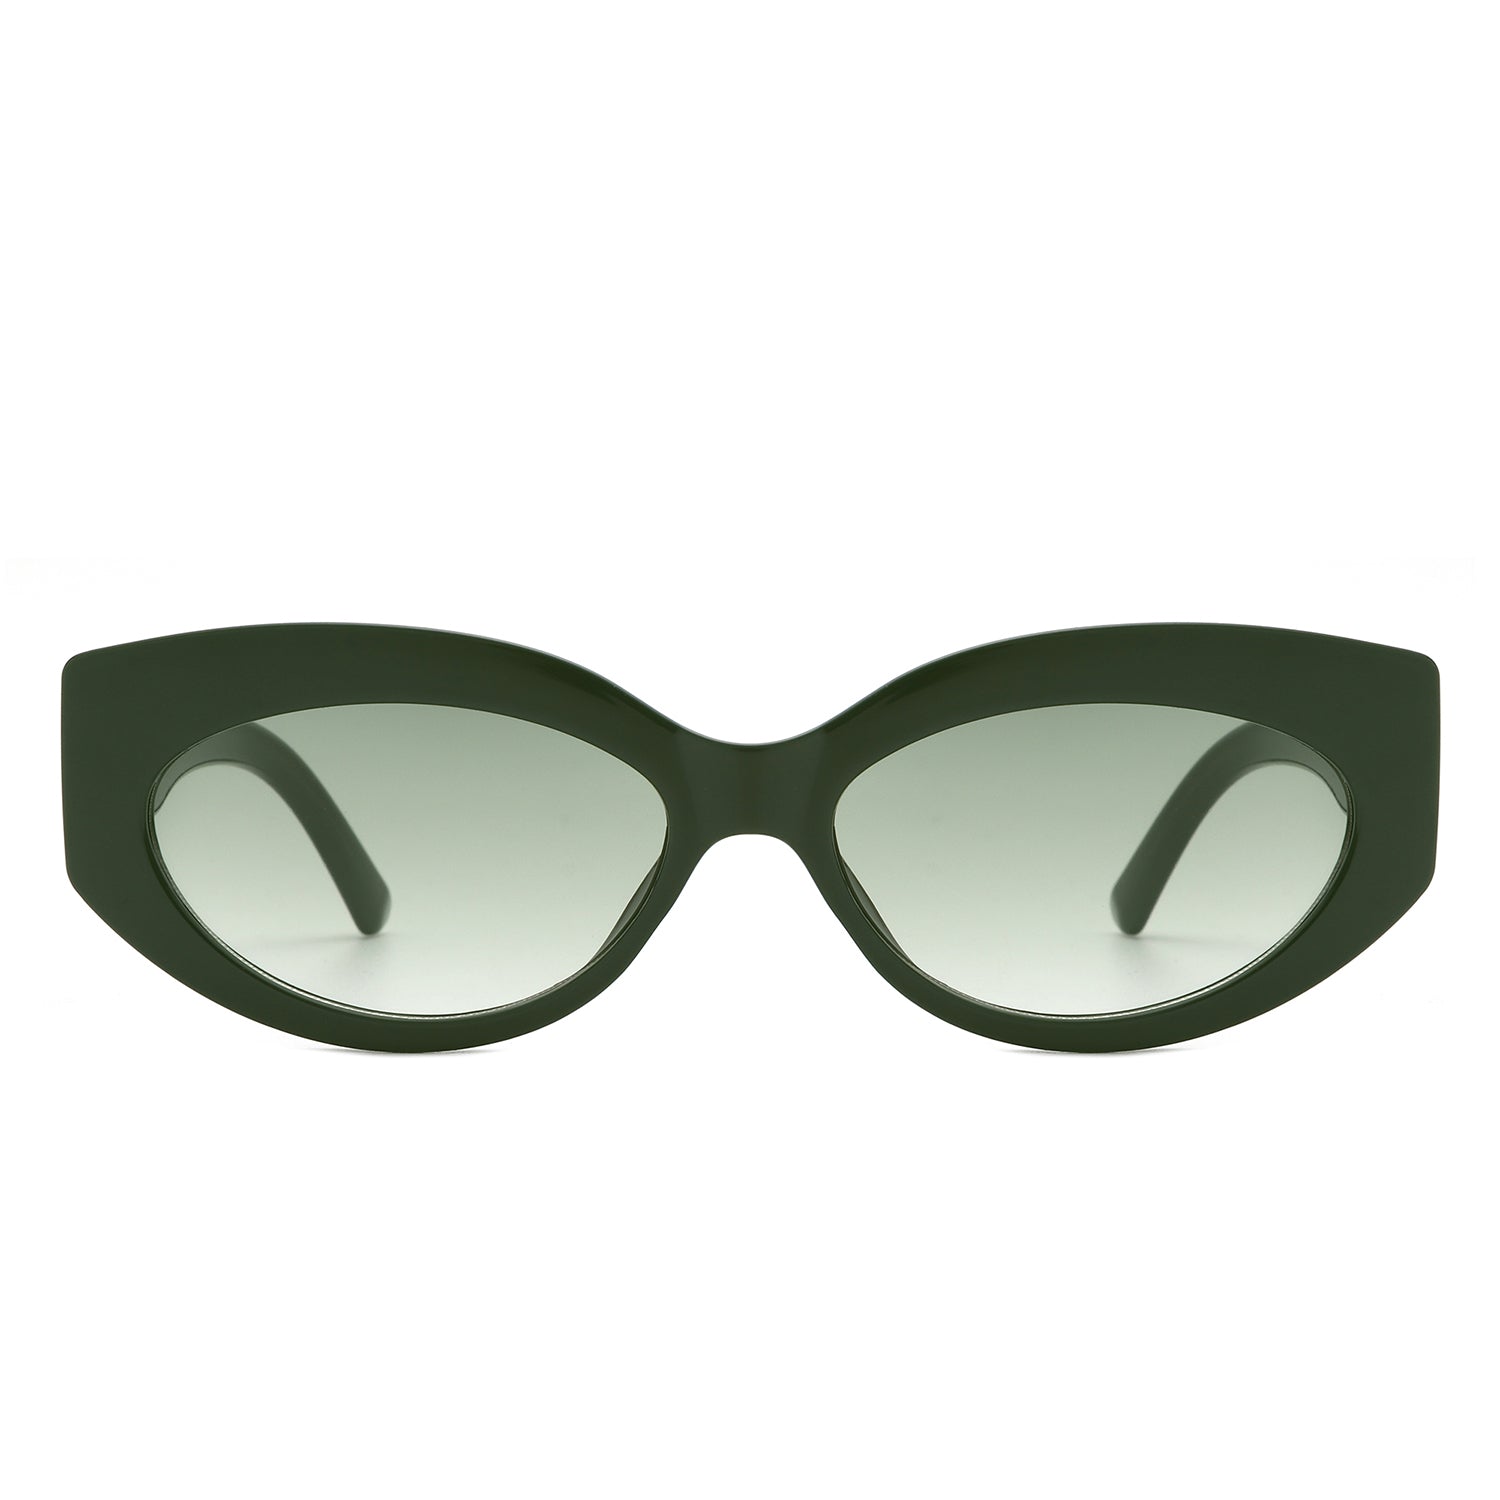 HS1195 - Oval Retro Tinted Fashion Round Cat Eye Wholesale Sunglasses